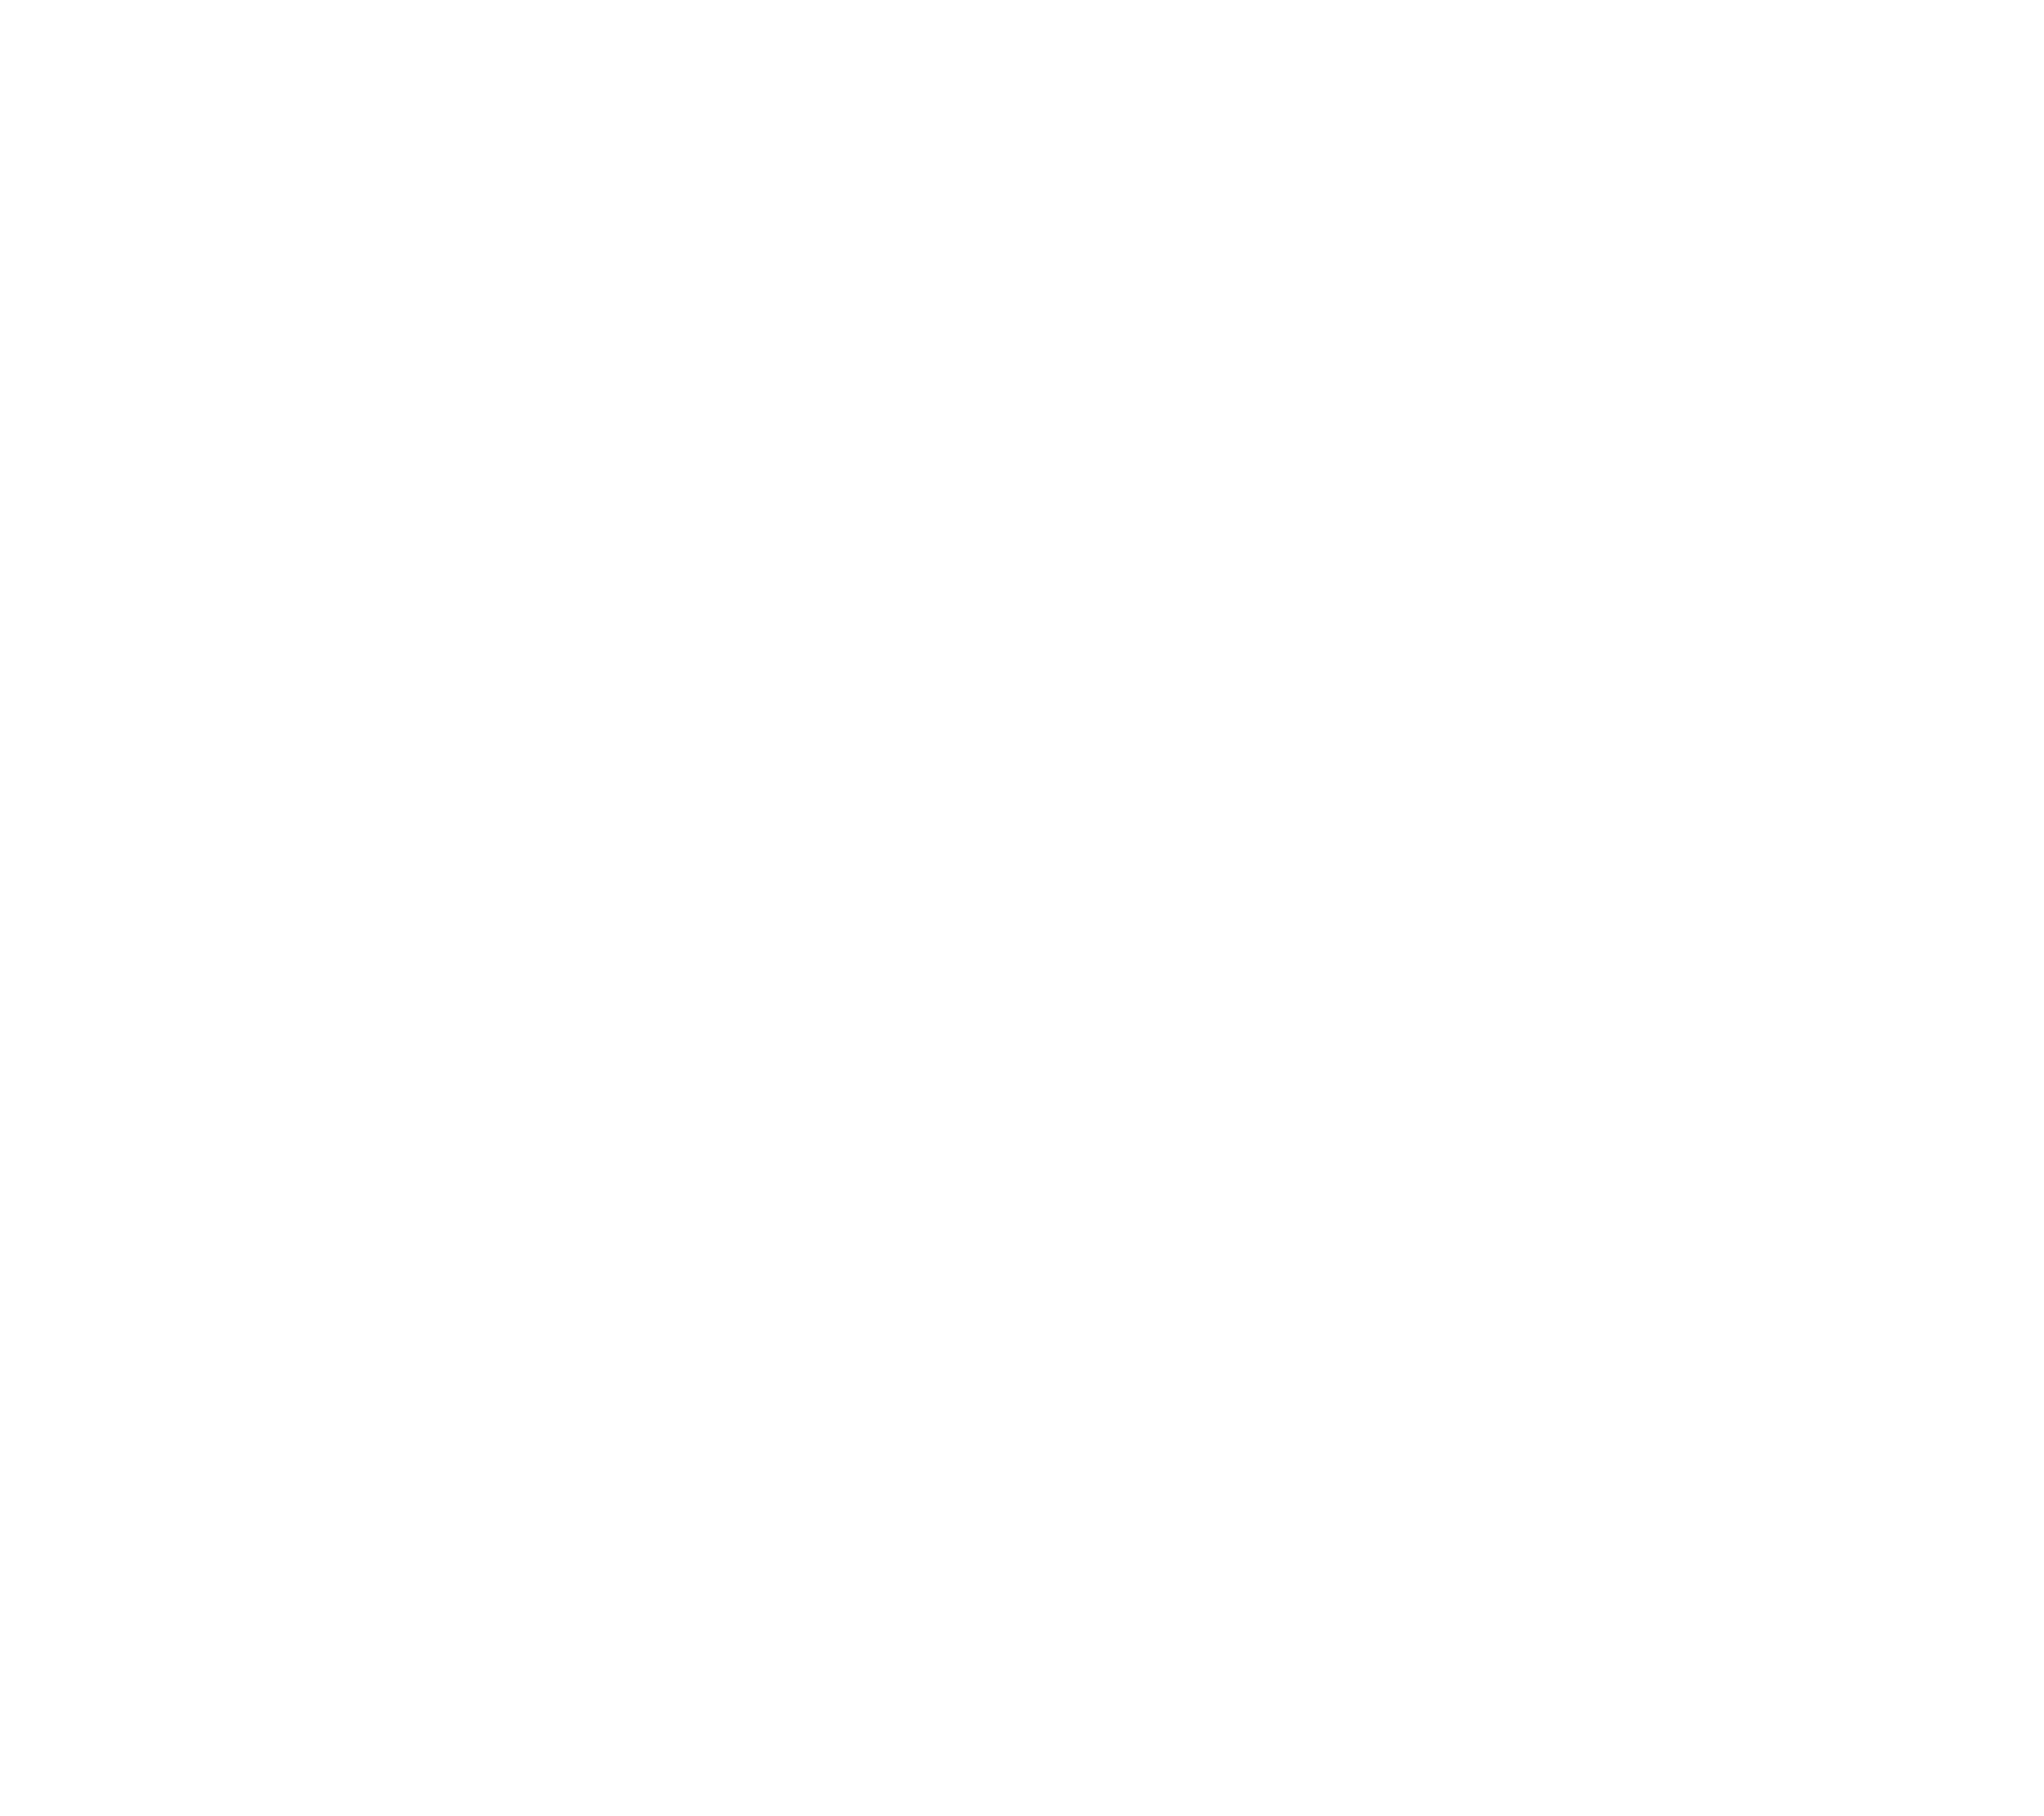 Bucharest Photofest, the 8th edition